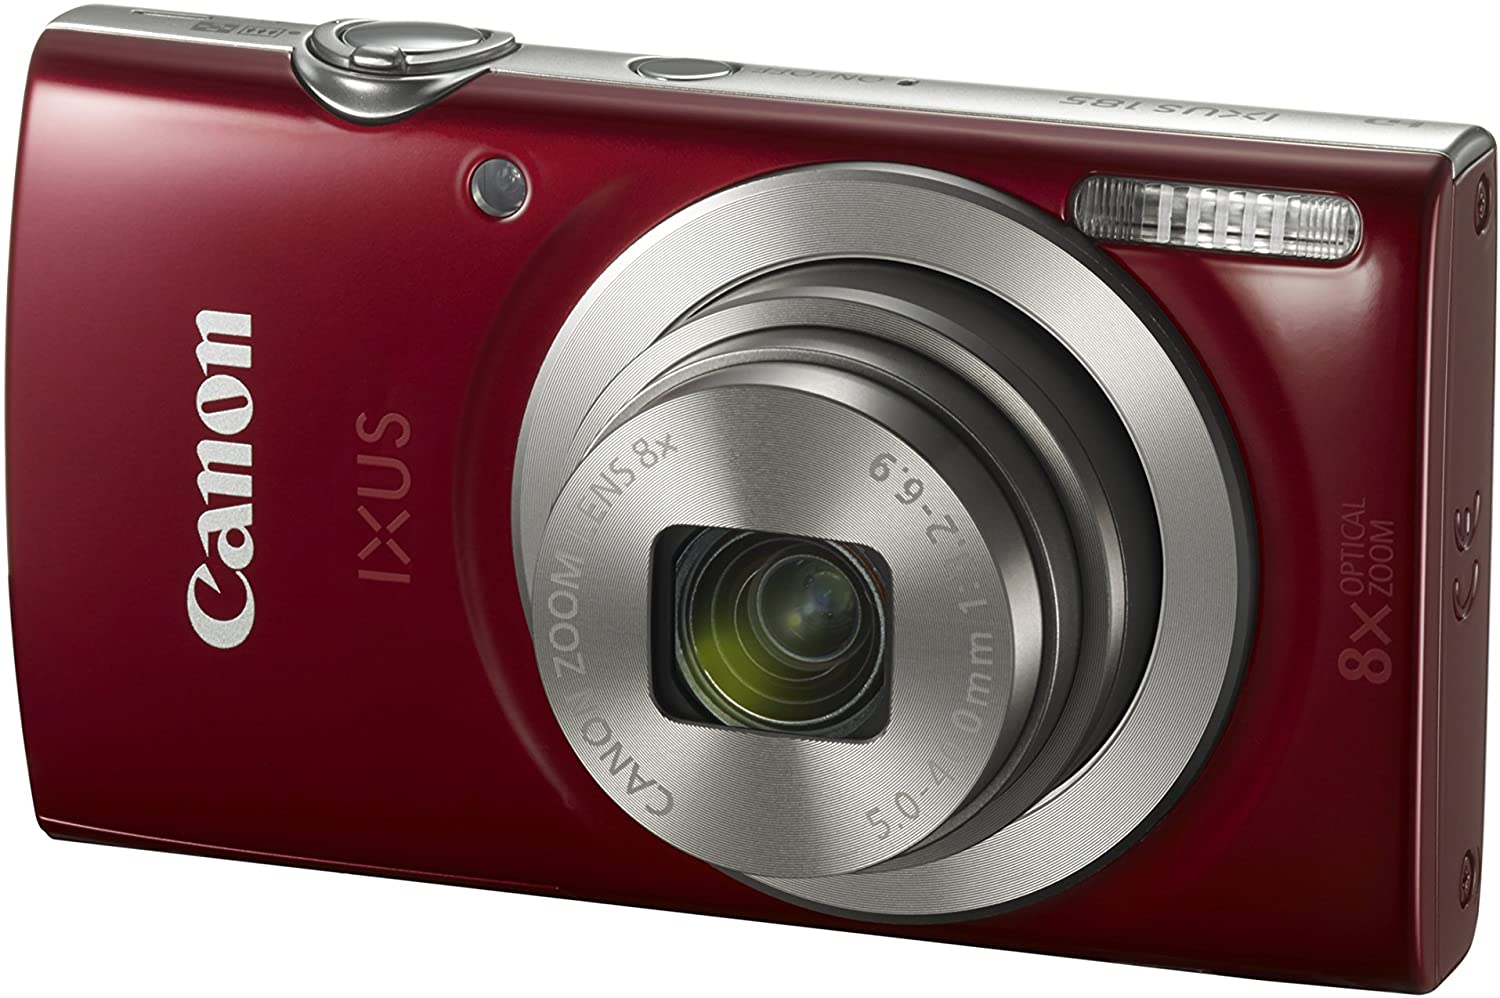 كانون IXUS 185 كاميرا رقمية بوينت اند شوت ، احمر